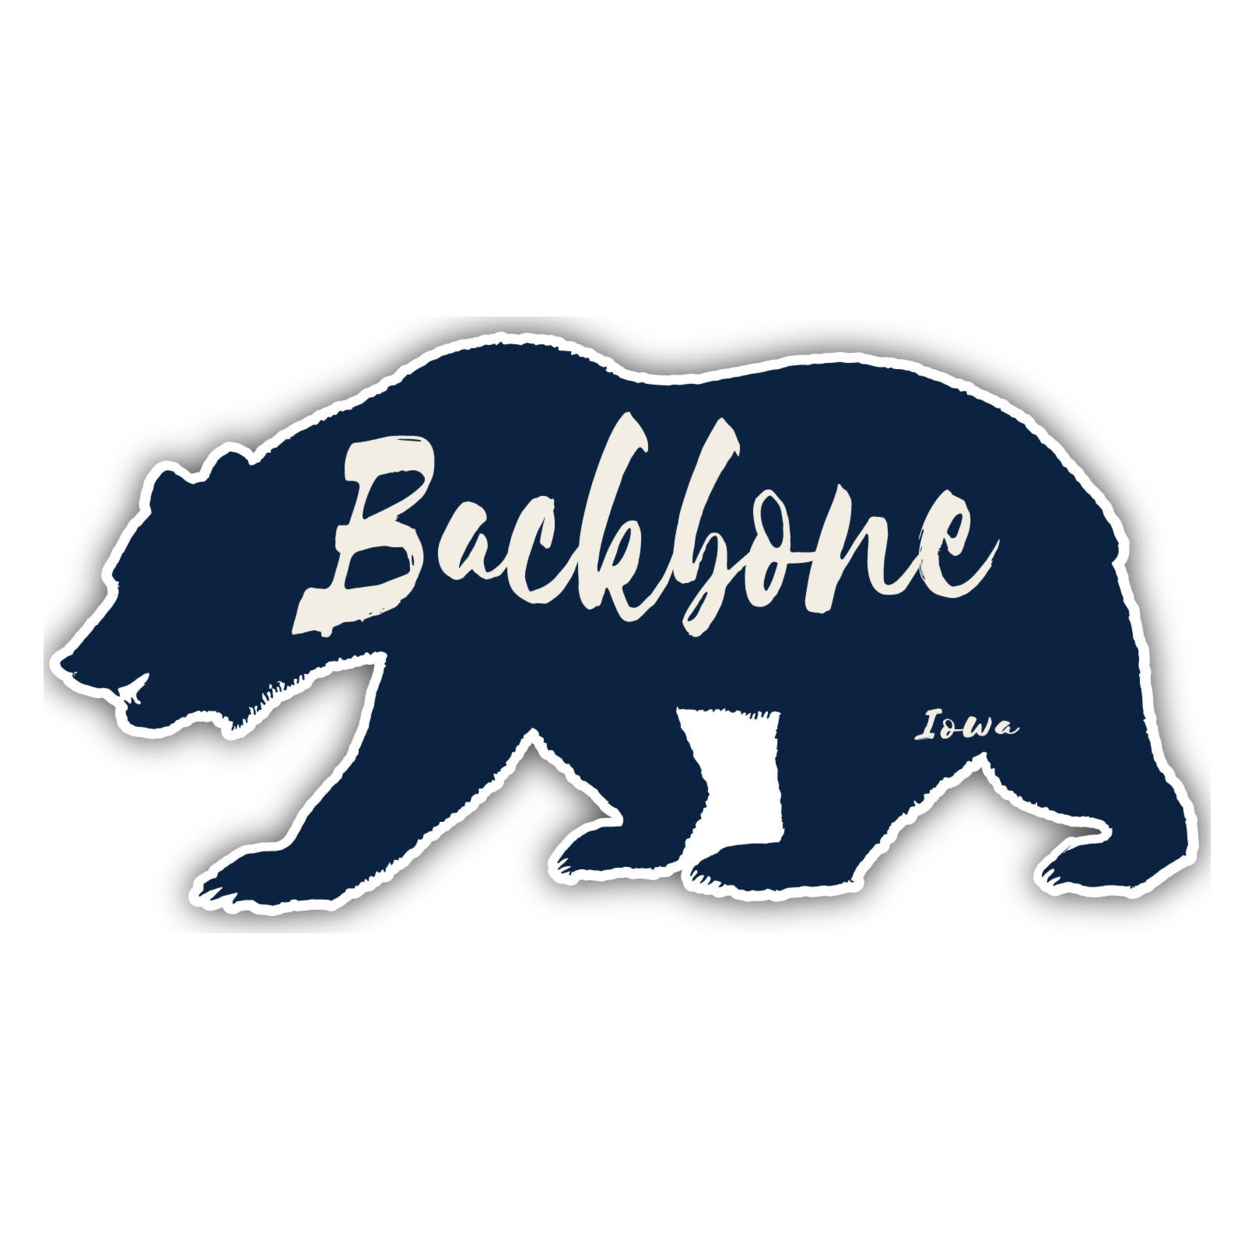 Backbone Iowa Souvenir Decorative Stickers (Choose Theme And Size) - 4-Pack, 12-Inch, Bear